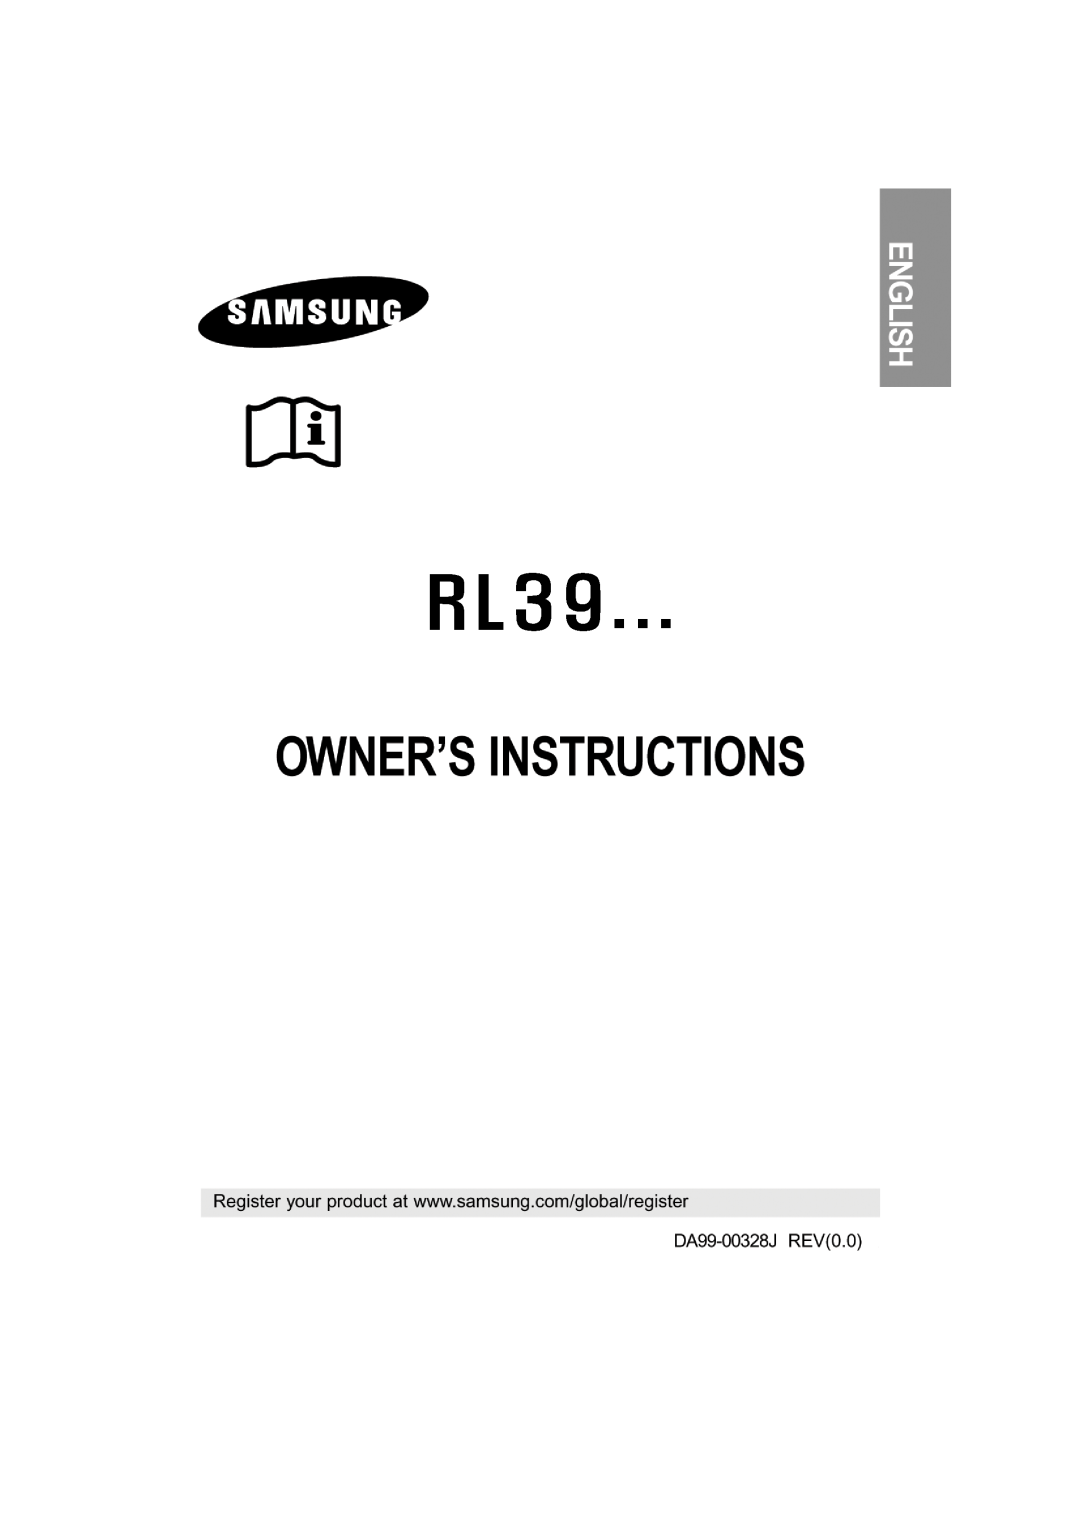 Samsung Rl 39 manual 